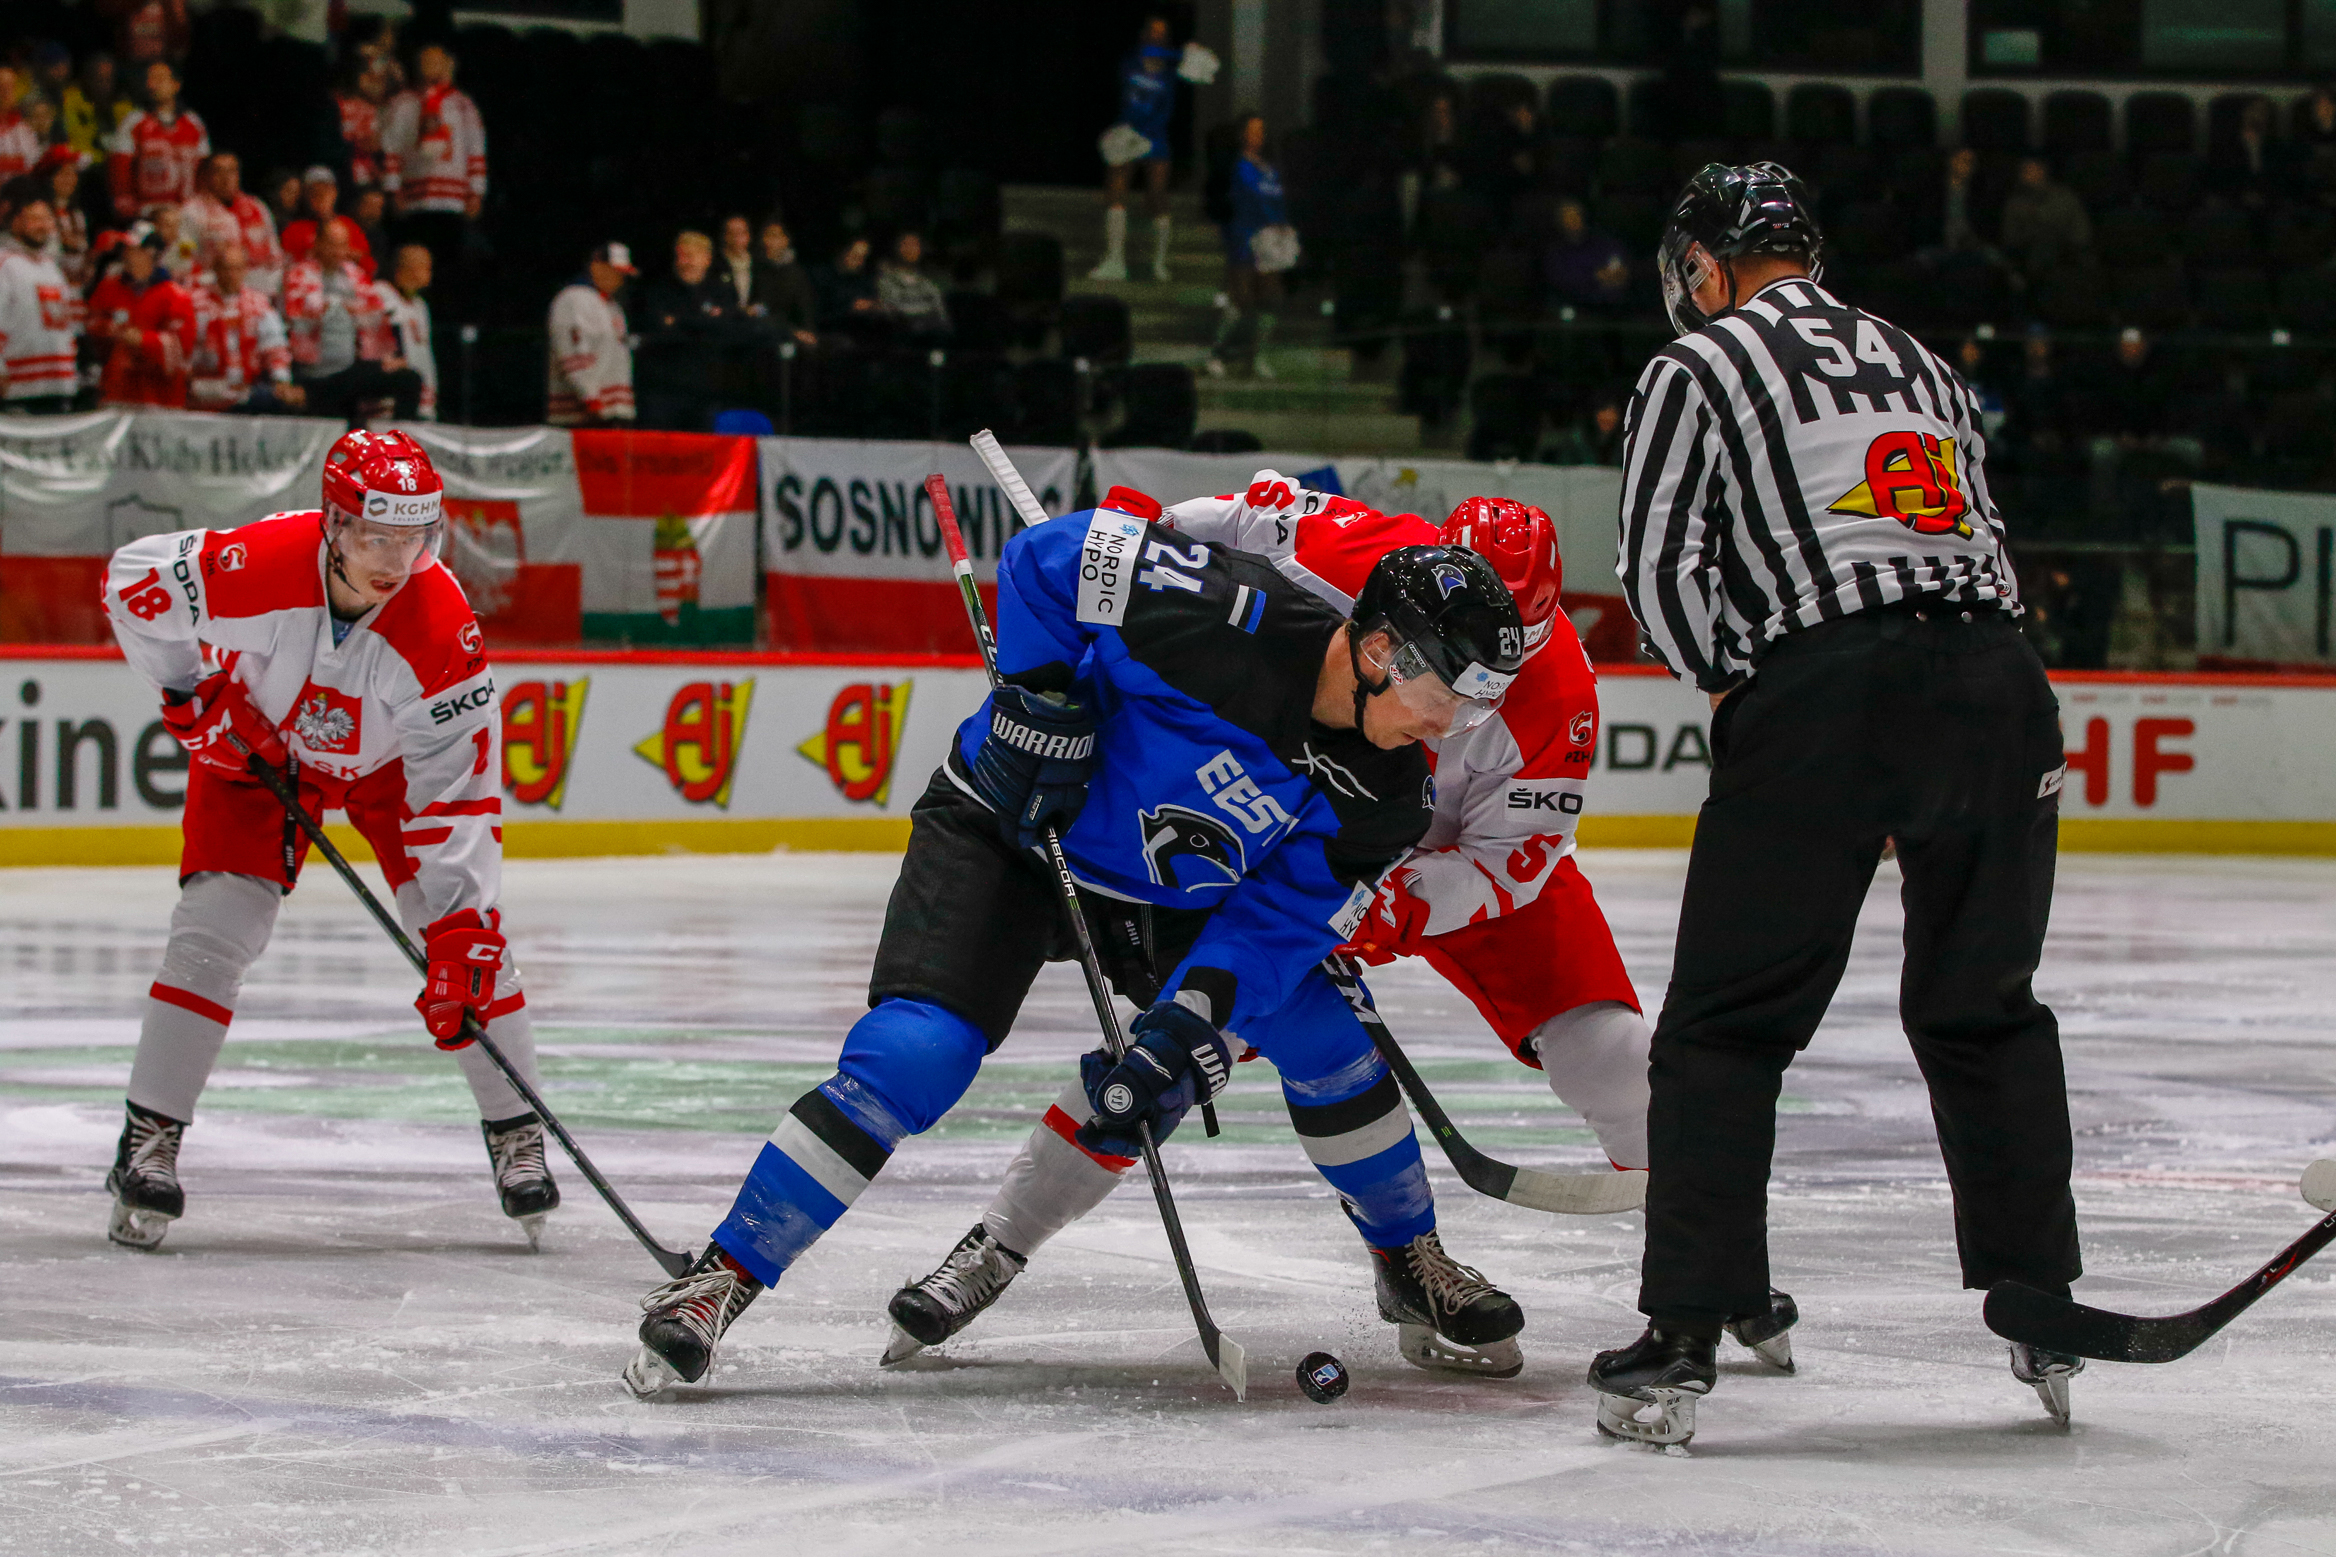 IIHF - Gallery: Estonia vs. Poland - 2019 IIHF Ice Hockey World ...